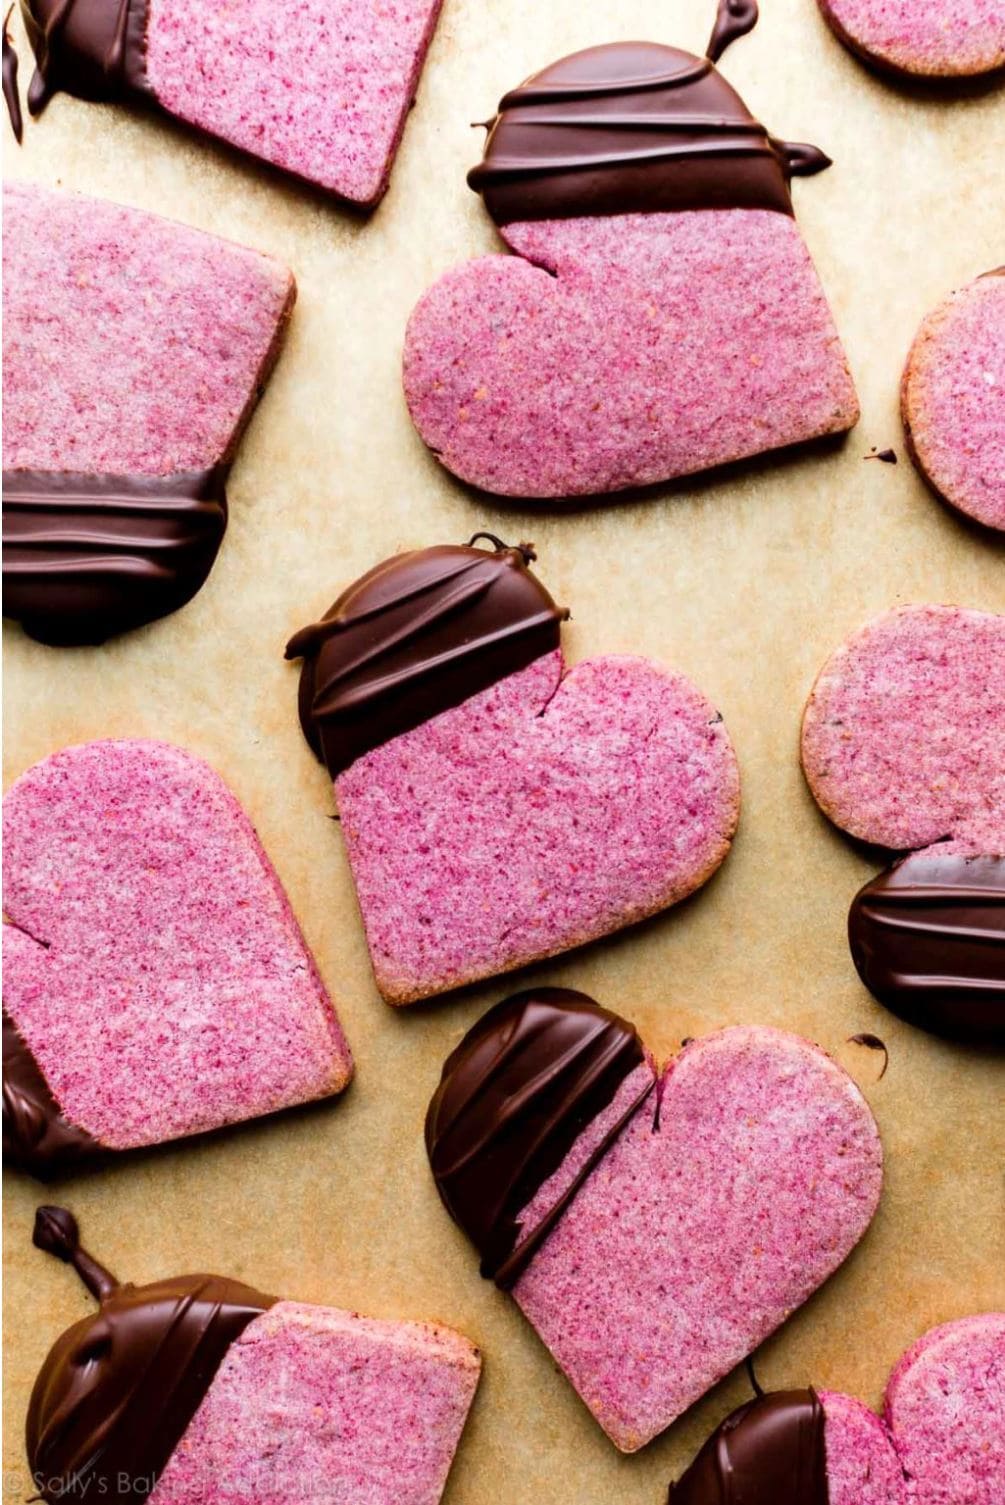 Raspberry sugar cookies dipped in chocolate.